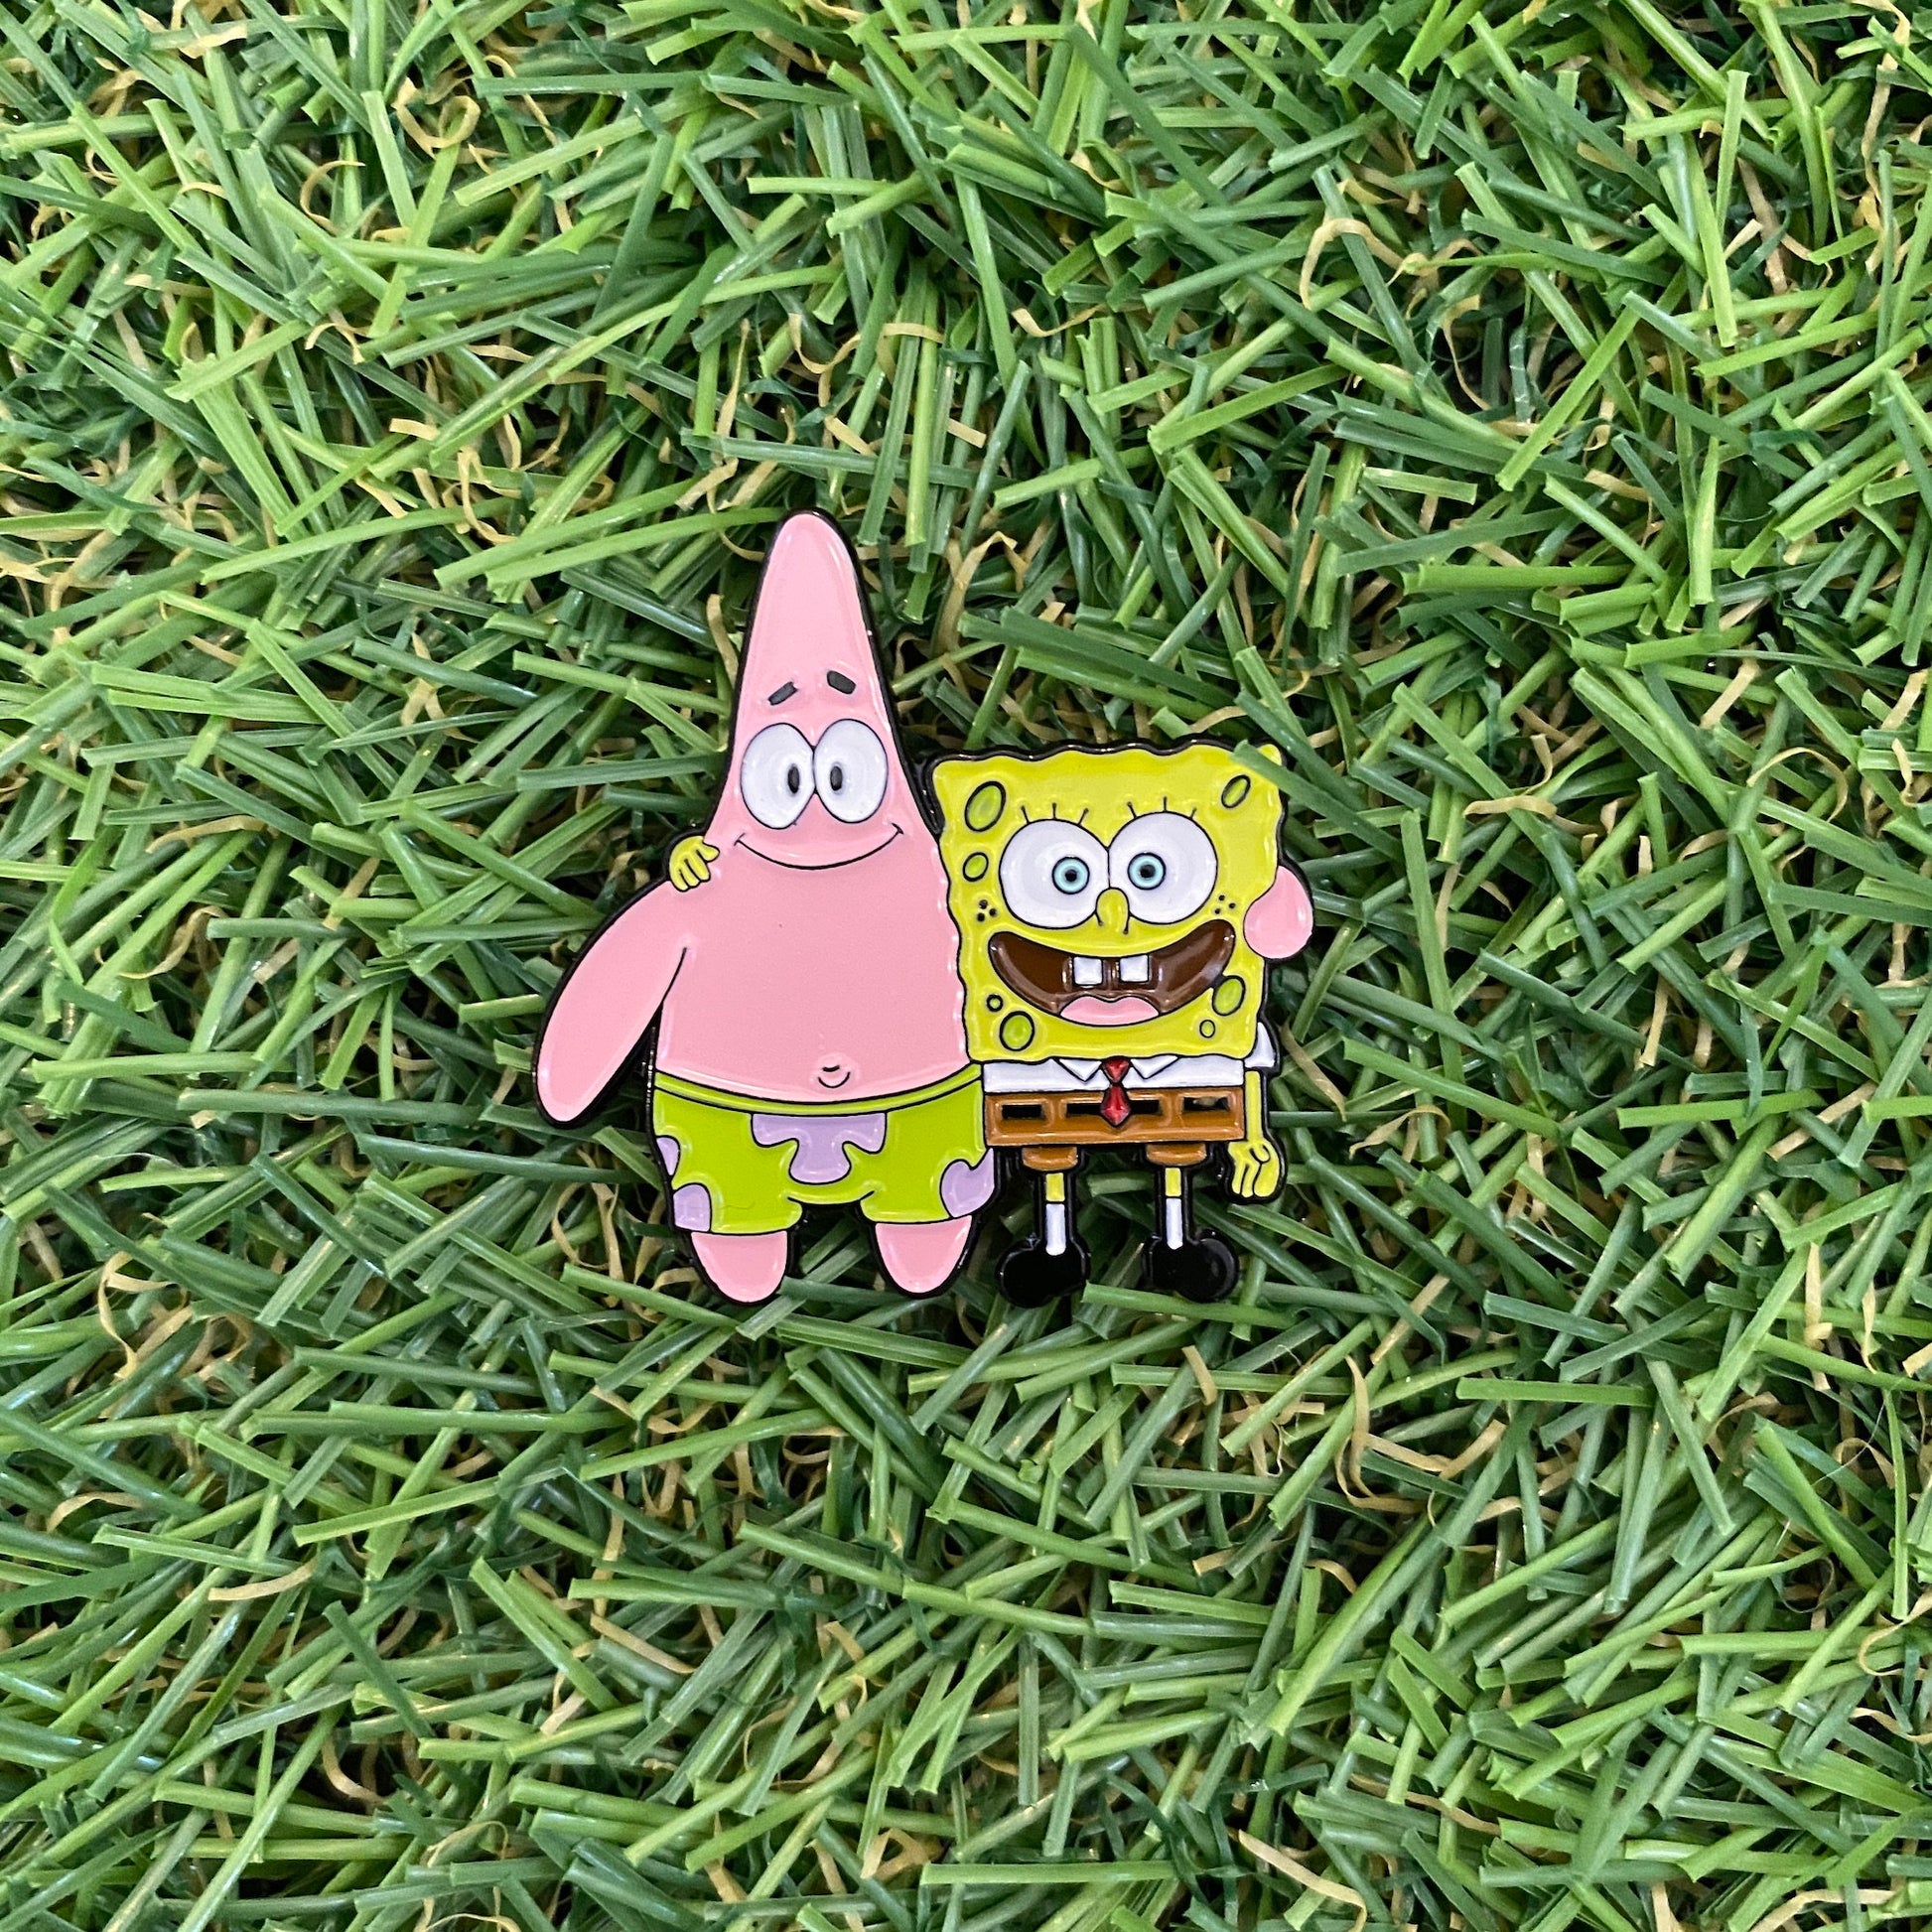 Spongebob Squarepants and Patrick Star Enamel Pin - thehappypin